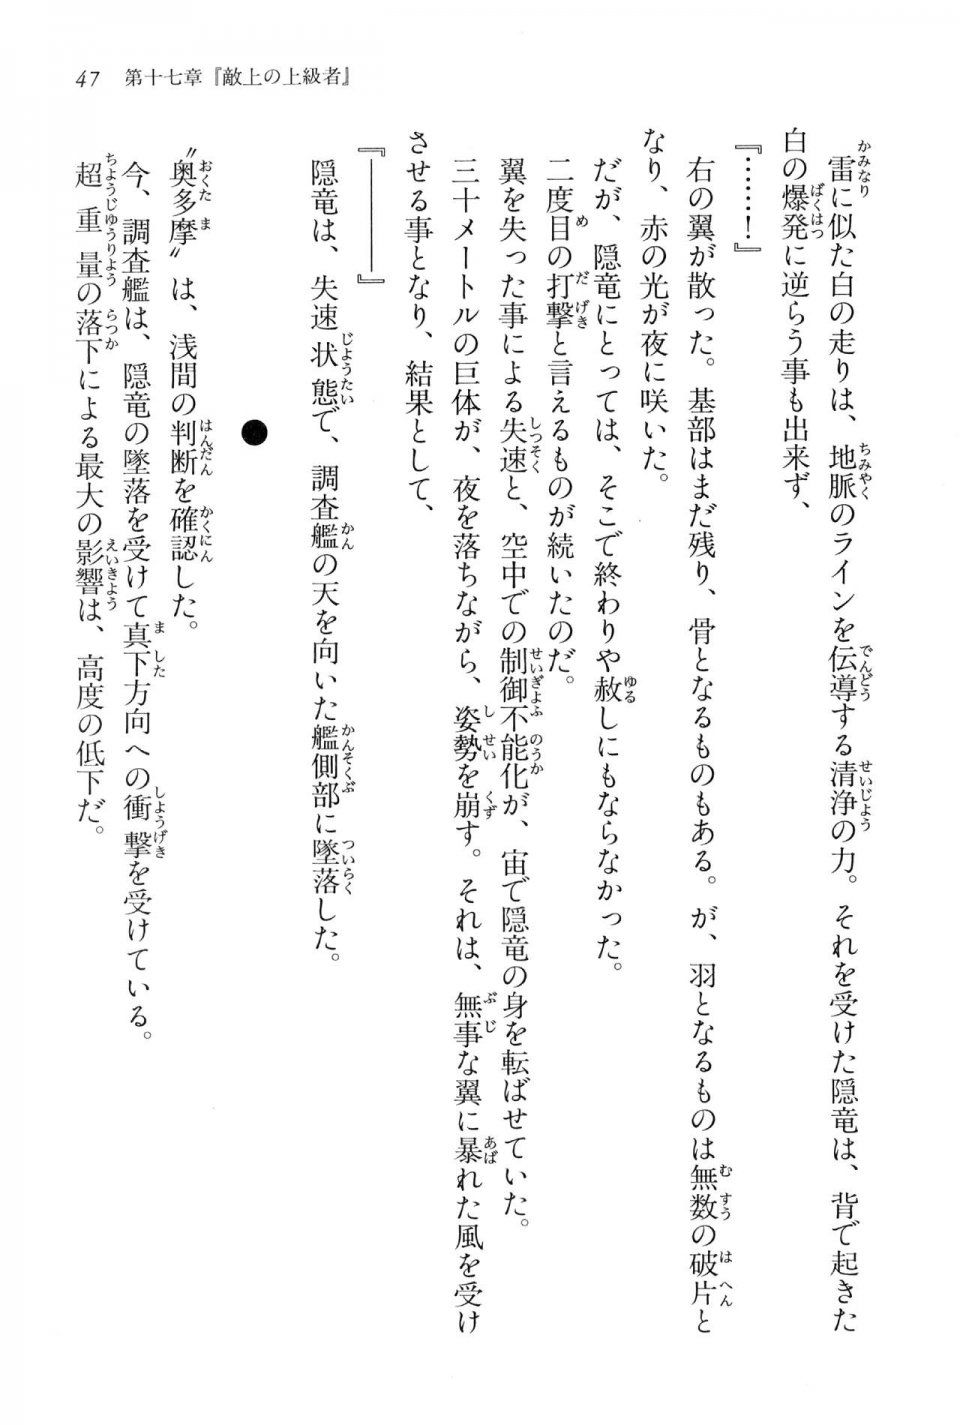 Kyoukai Senjou no Horizon BD Special Mininovel Vol 4(2B) - Photo #51